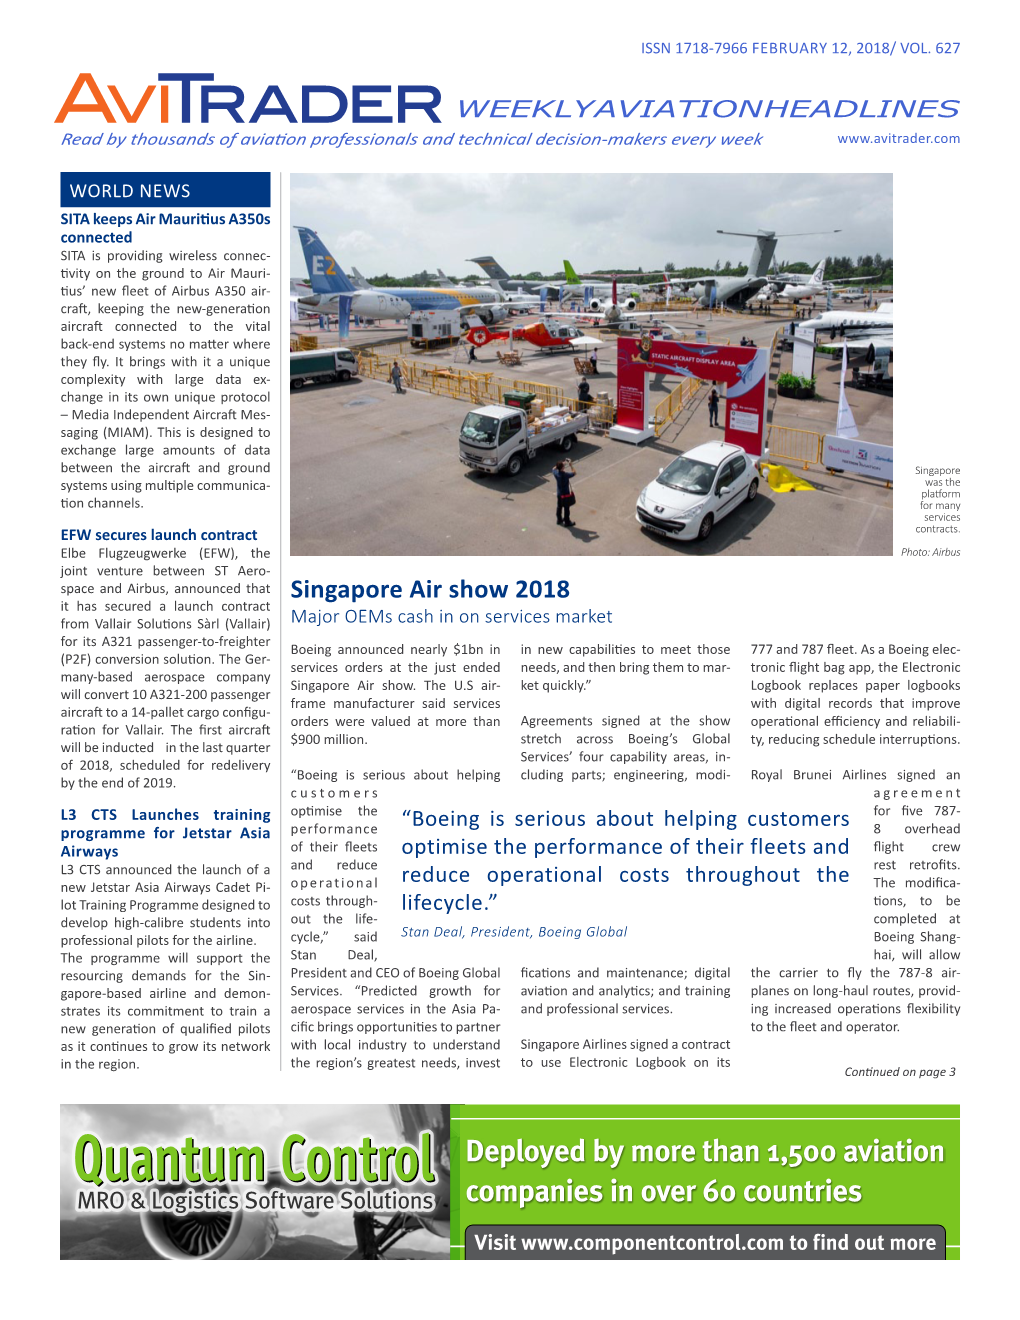 Avitrader Weekly Aviation Headline News